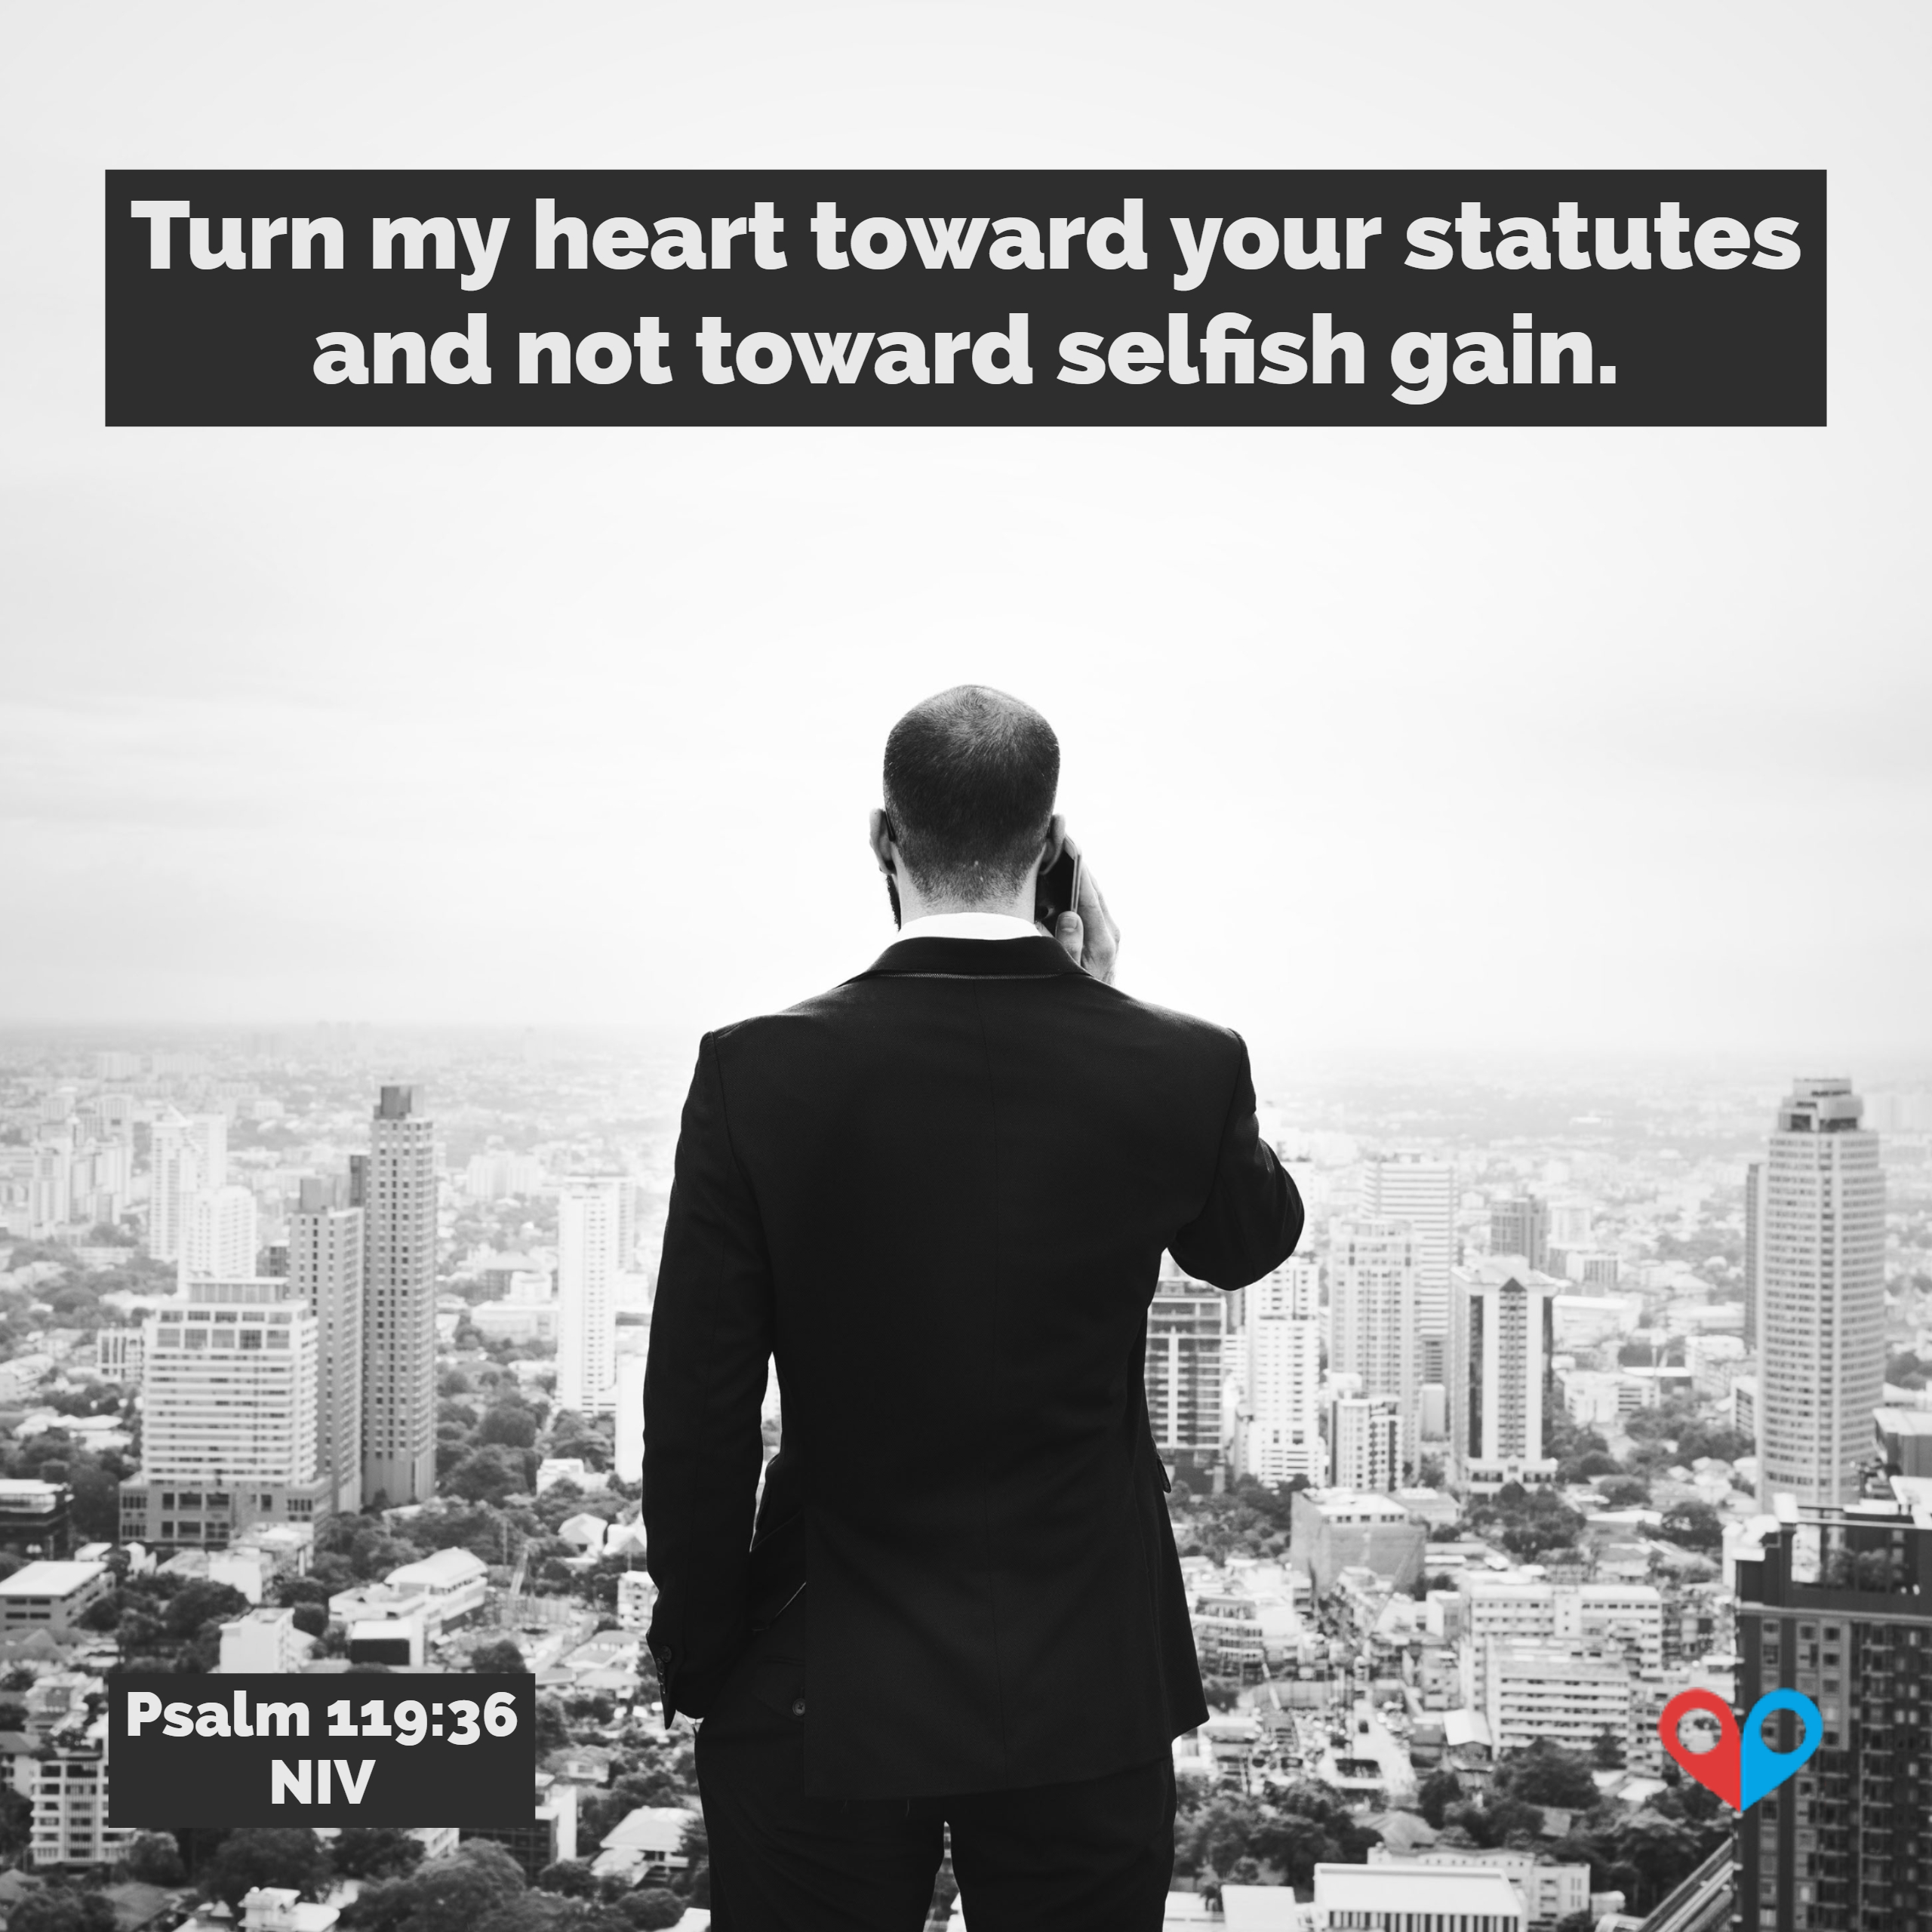 PSALM 119:36: Turn my heart toward your statutes and not toward selfish gain.